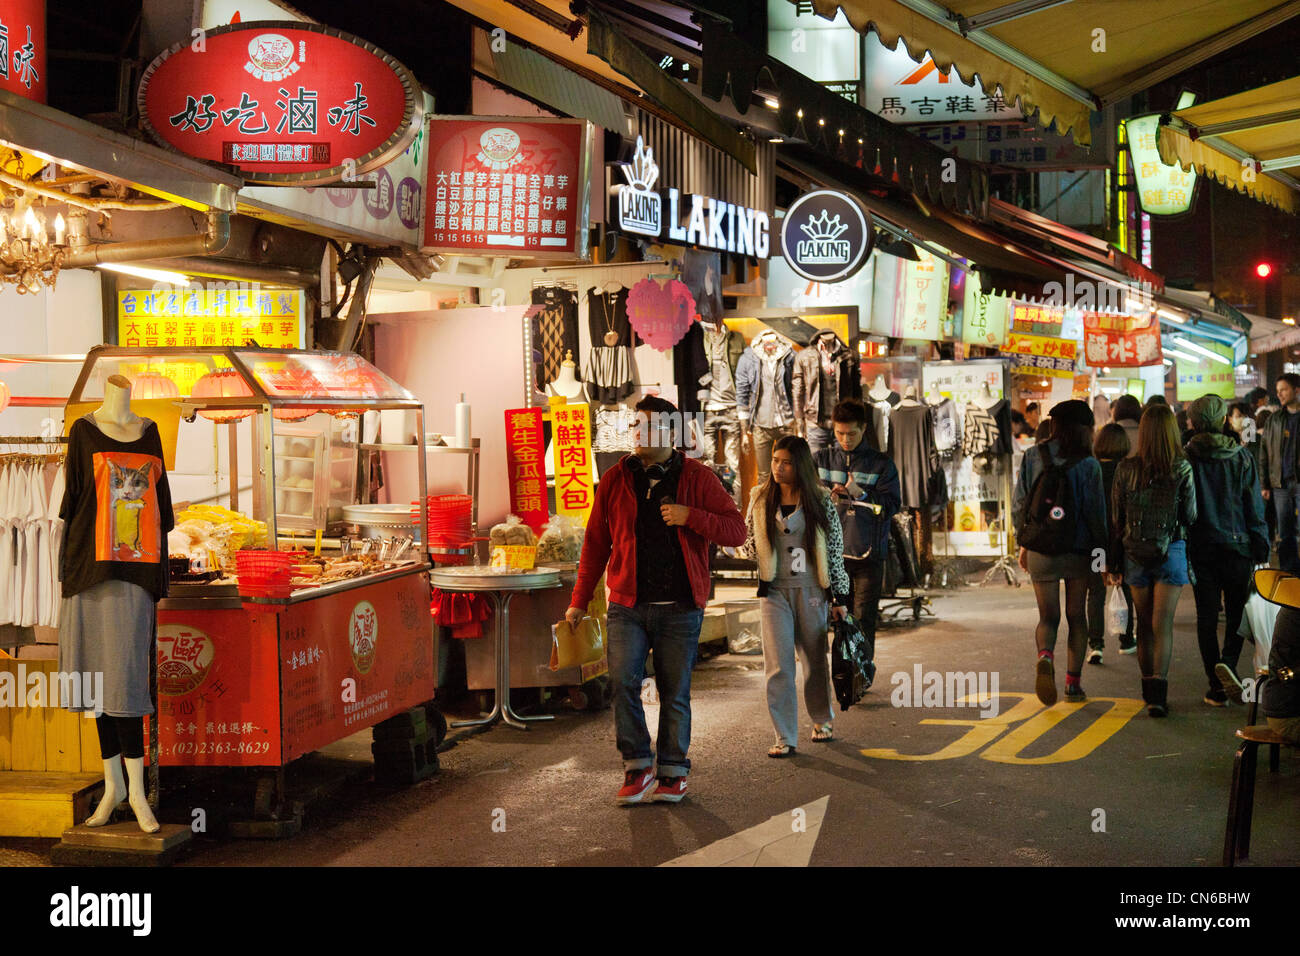 Shoppers in Shida Night Market, Taipei, Taiwan. JMH5634 Stock Photo